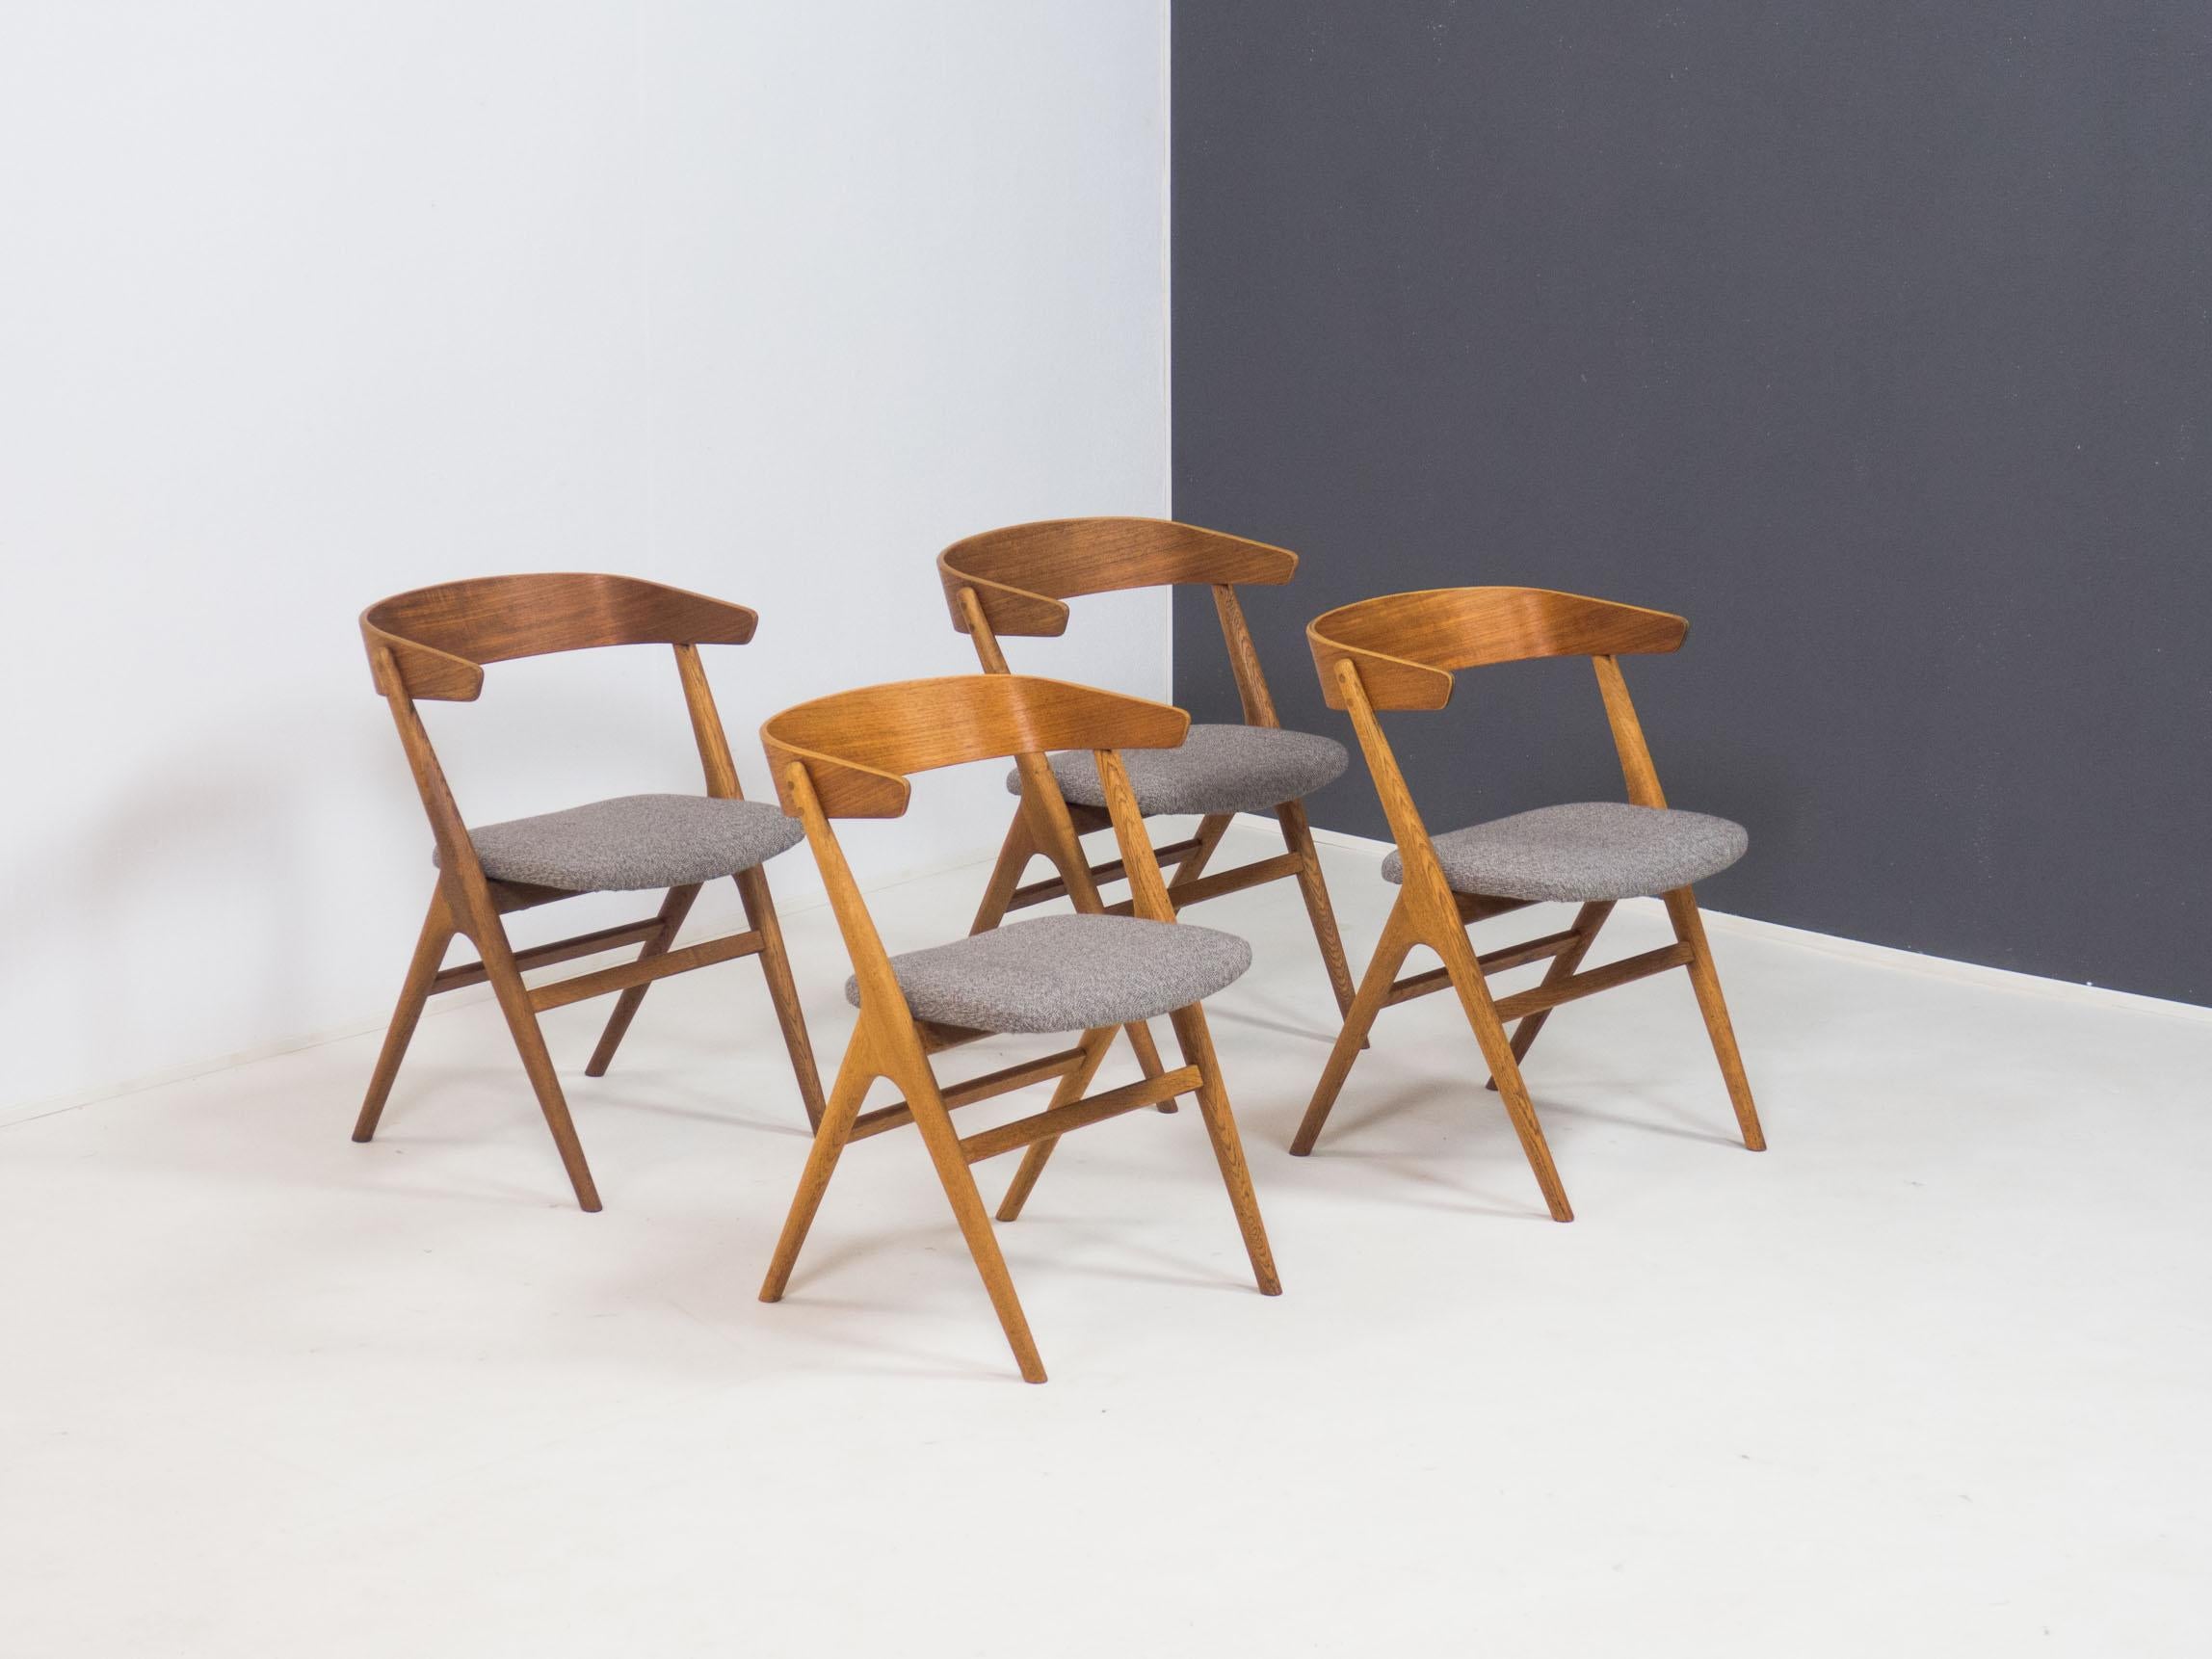 Sibast Møbler model ‘no. 9’ teak & oak dining chairs – Helge Sibast  2